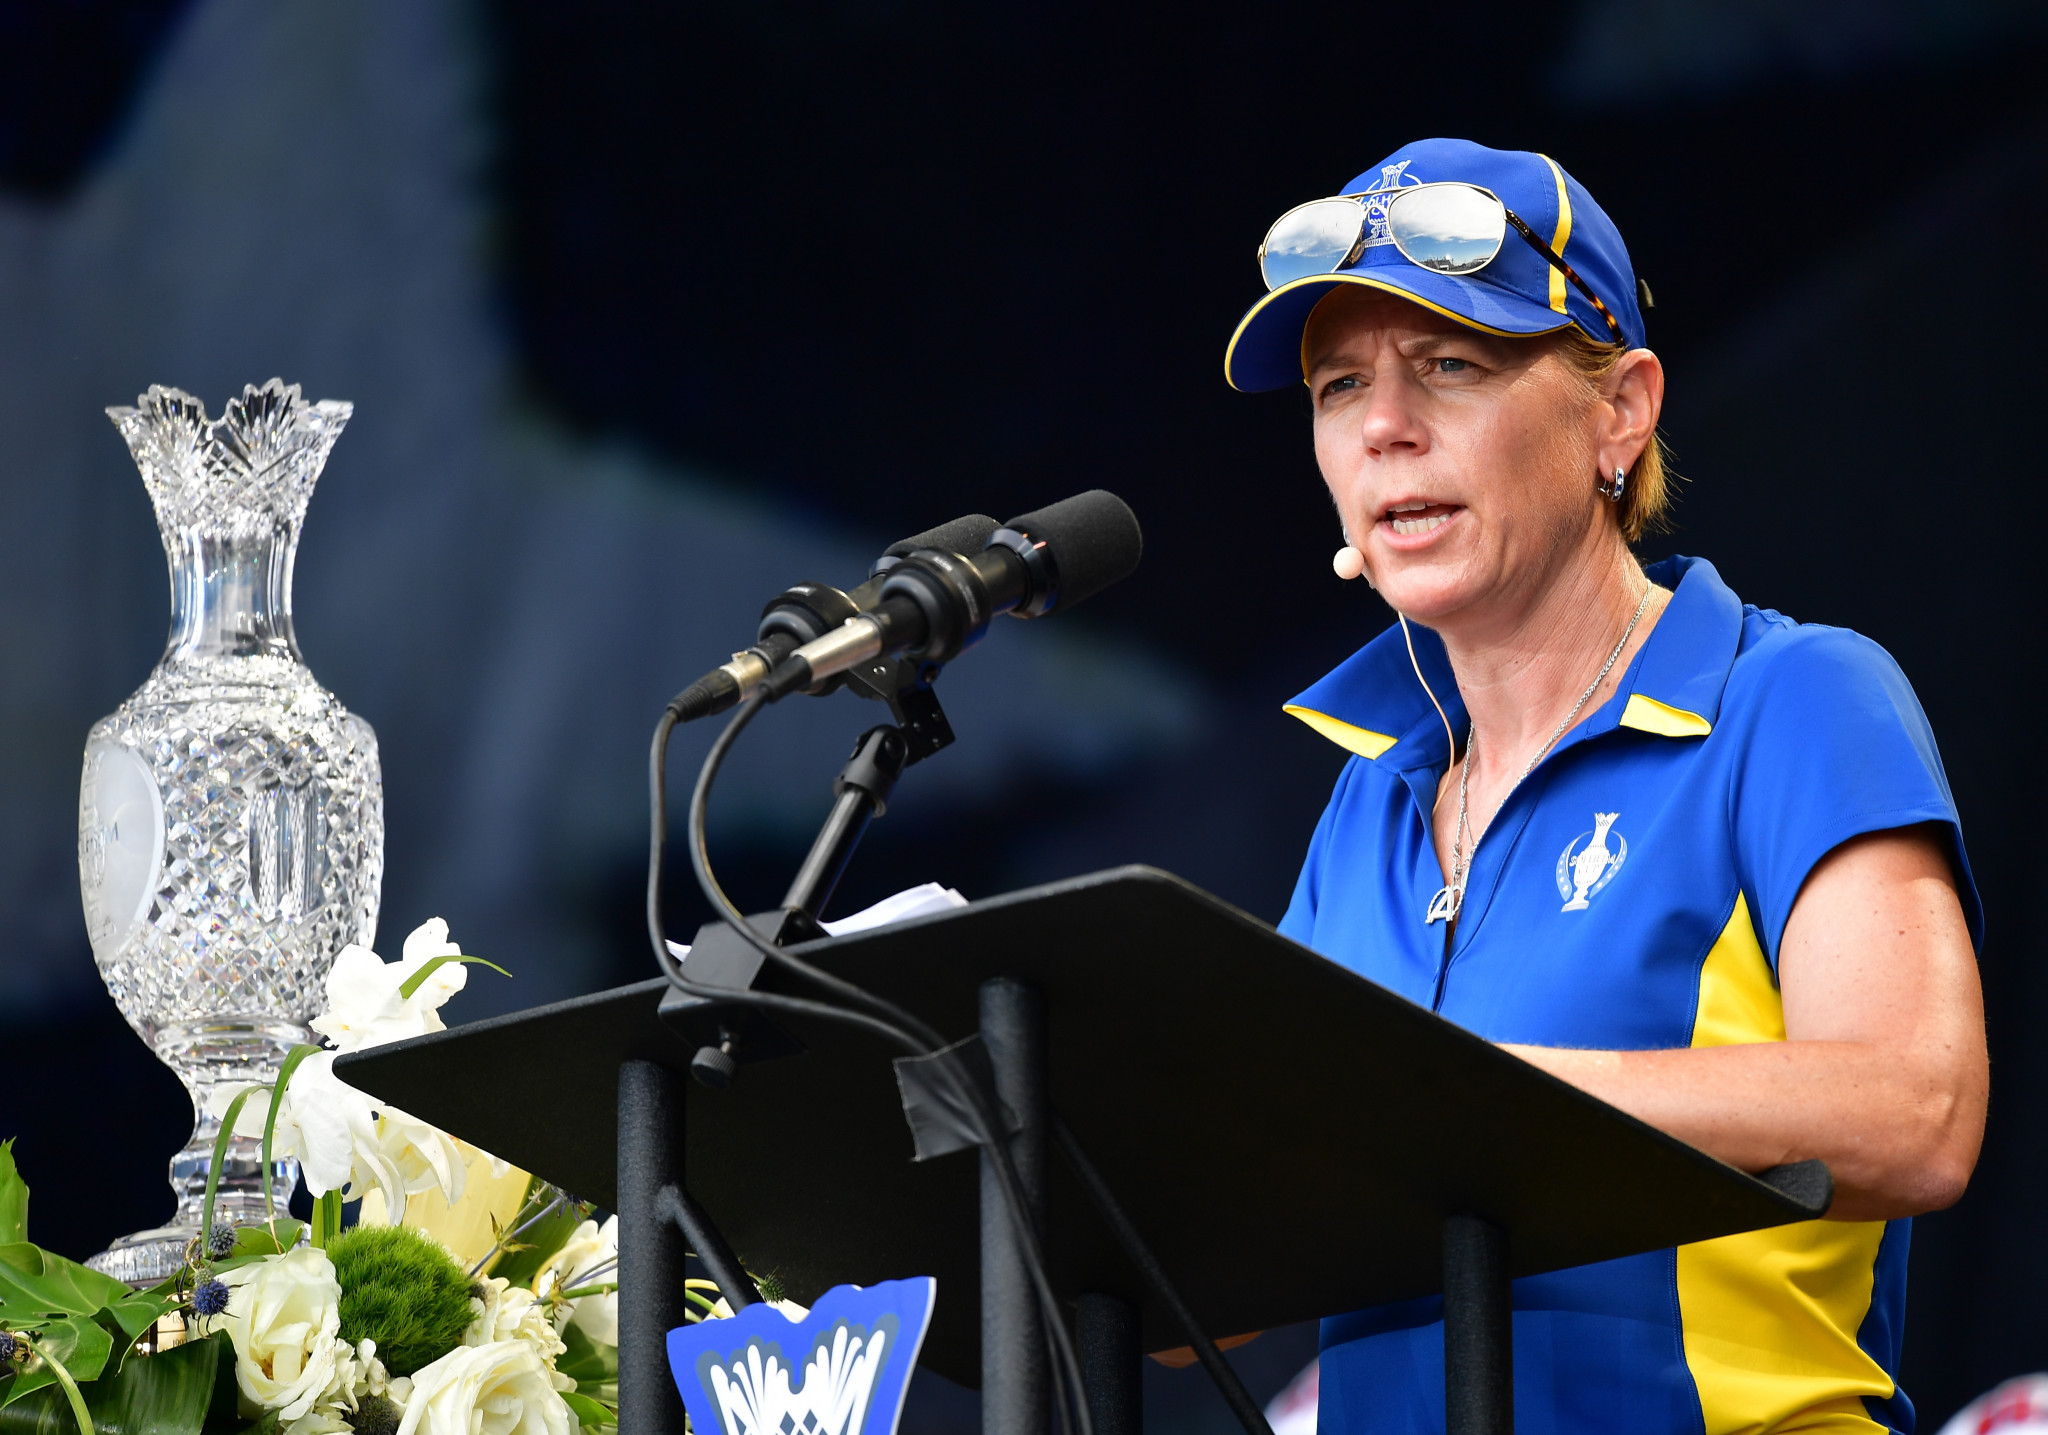  Annika Sörenstam has been elected President of the International Golf Federation ©Getty Images